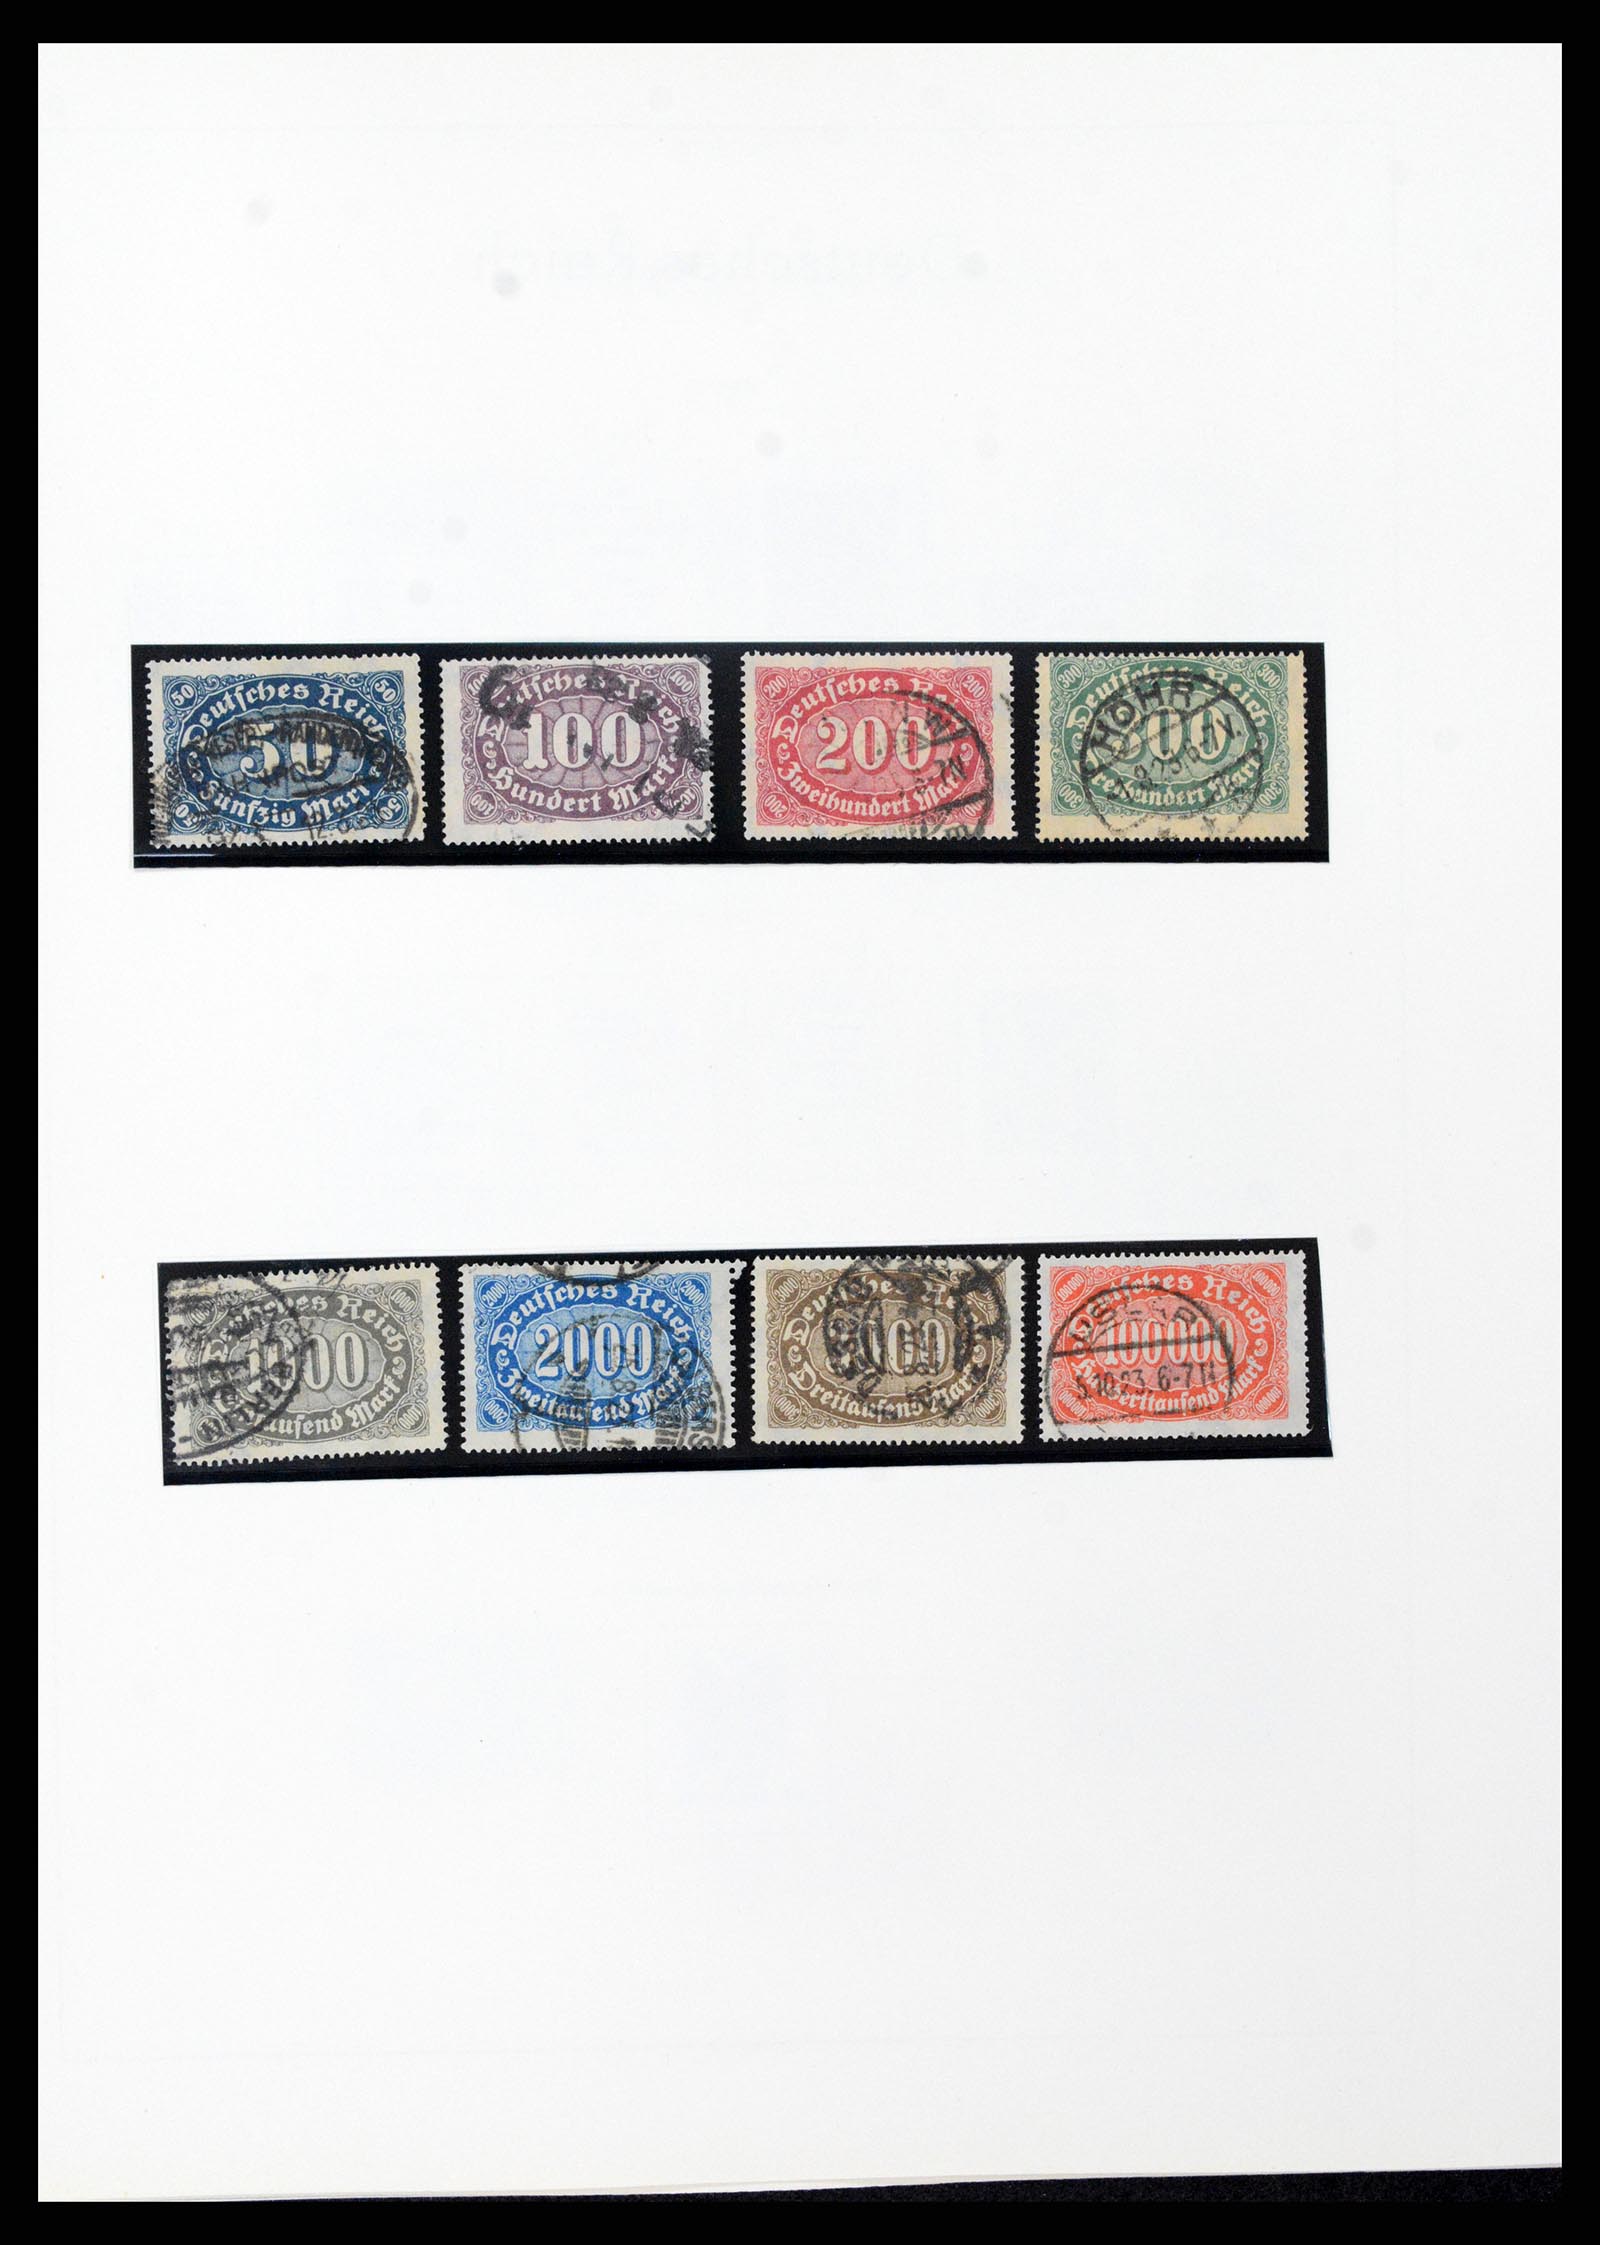 37589 022 - Stamp collection 37589 German Reich 1872-1945.